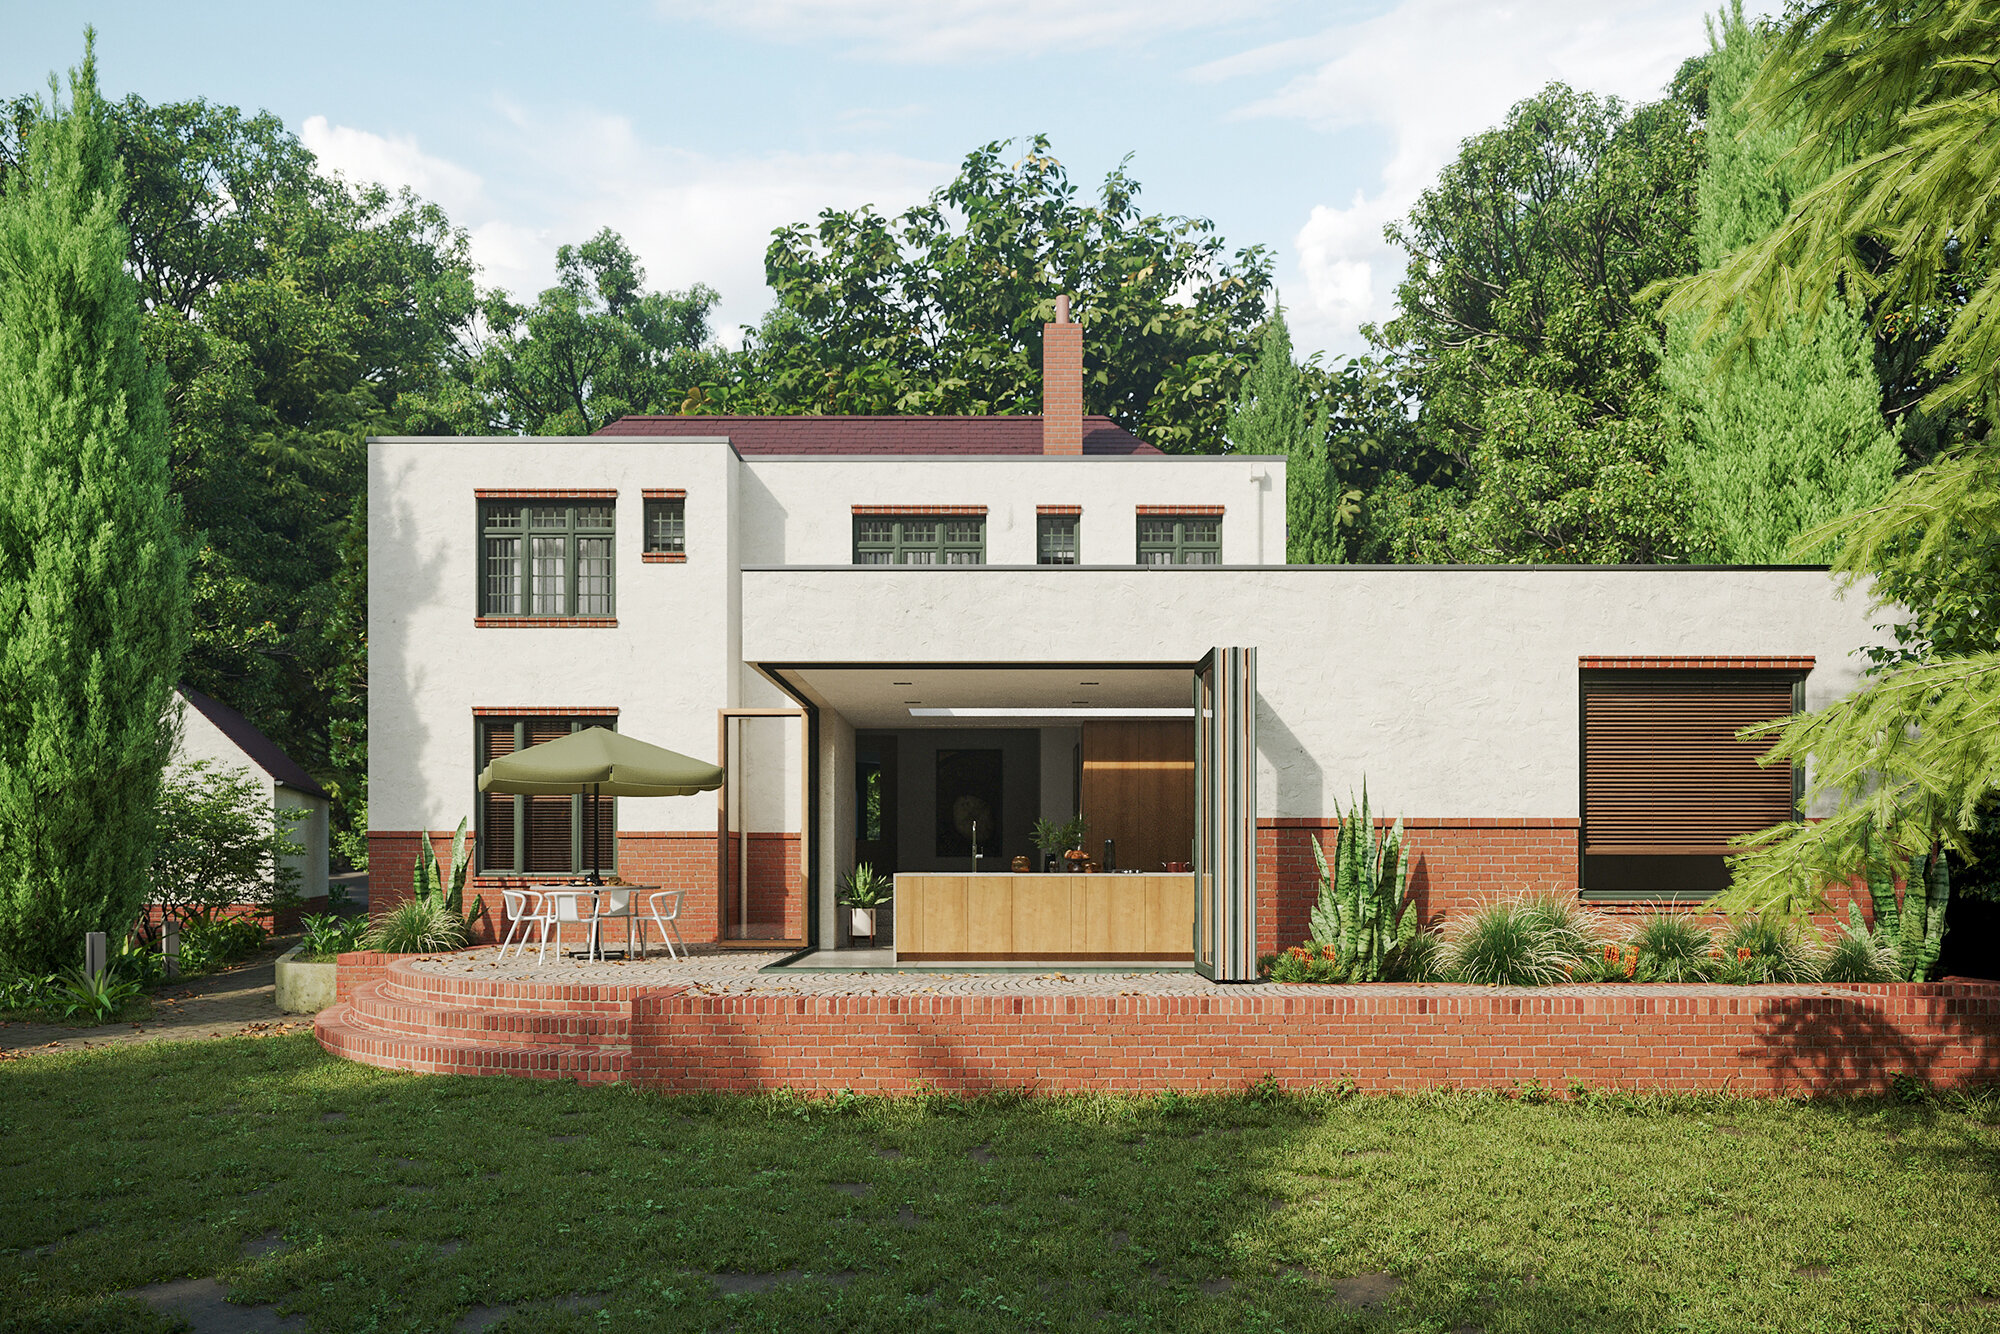 ralph-kent-architect-1930s-house-kitchen-bathhouse-extension-exterior-1-rectangle.jpg